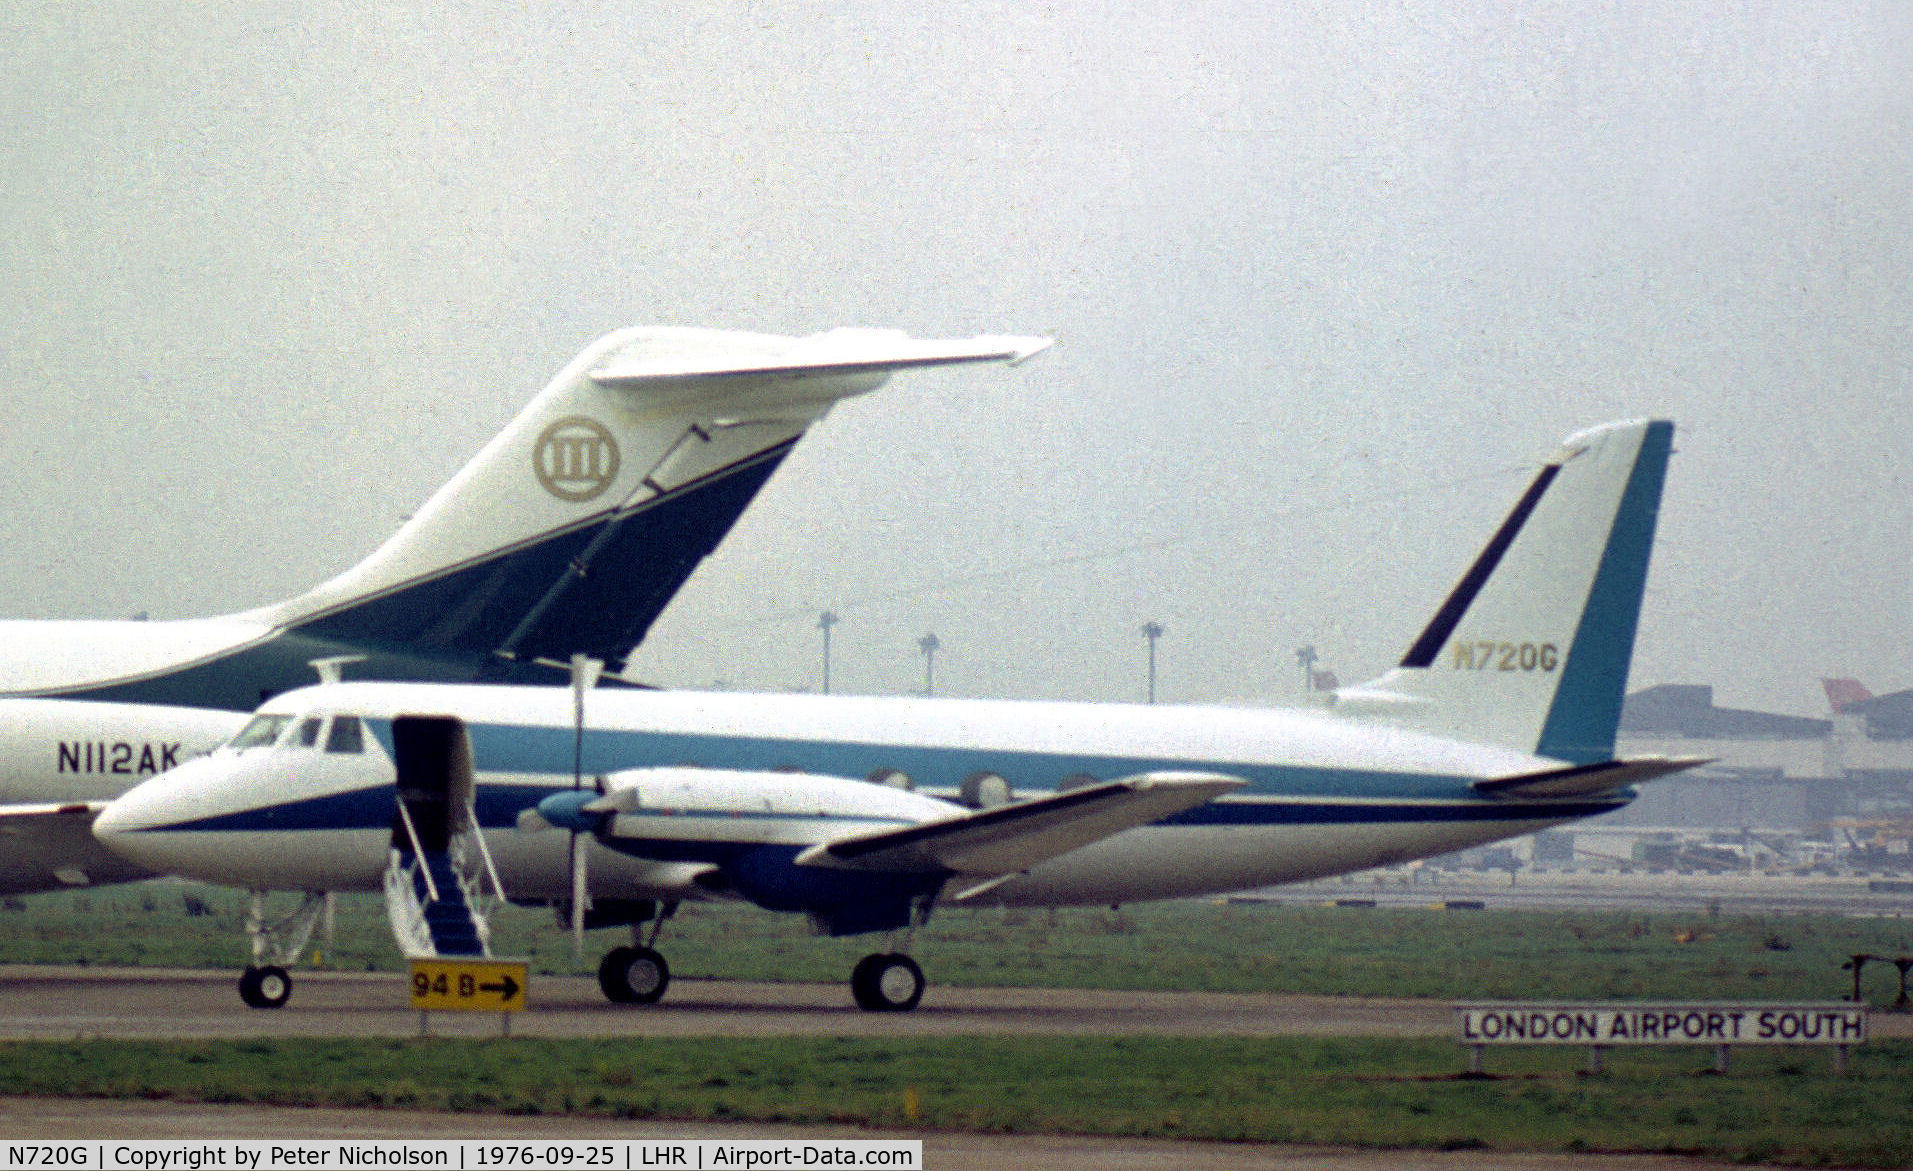 N720G, 1964 Grumman G-159 Gulfstream 1 C/N 143, ITT Corporation's Gulfstream I based in Brussels parked at Heathrow in September 1976.